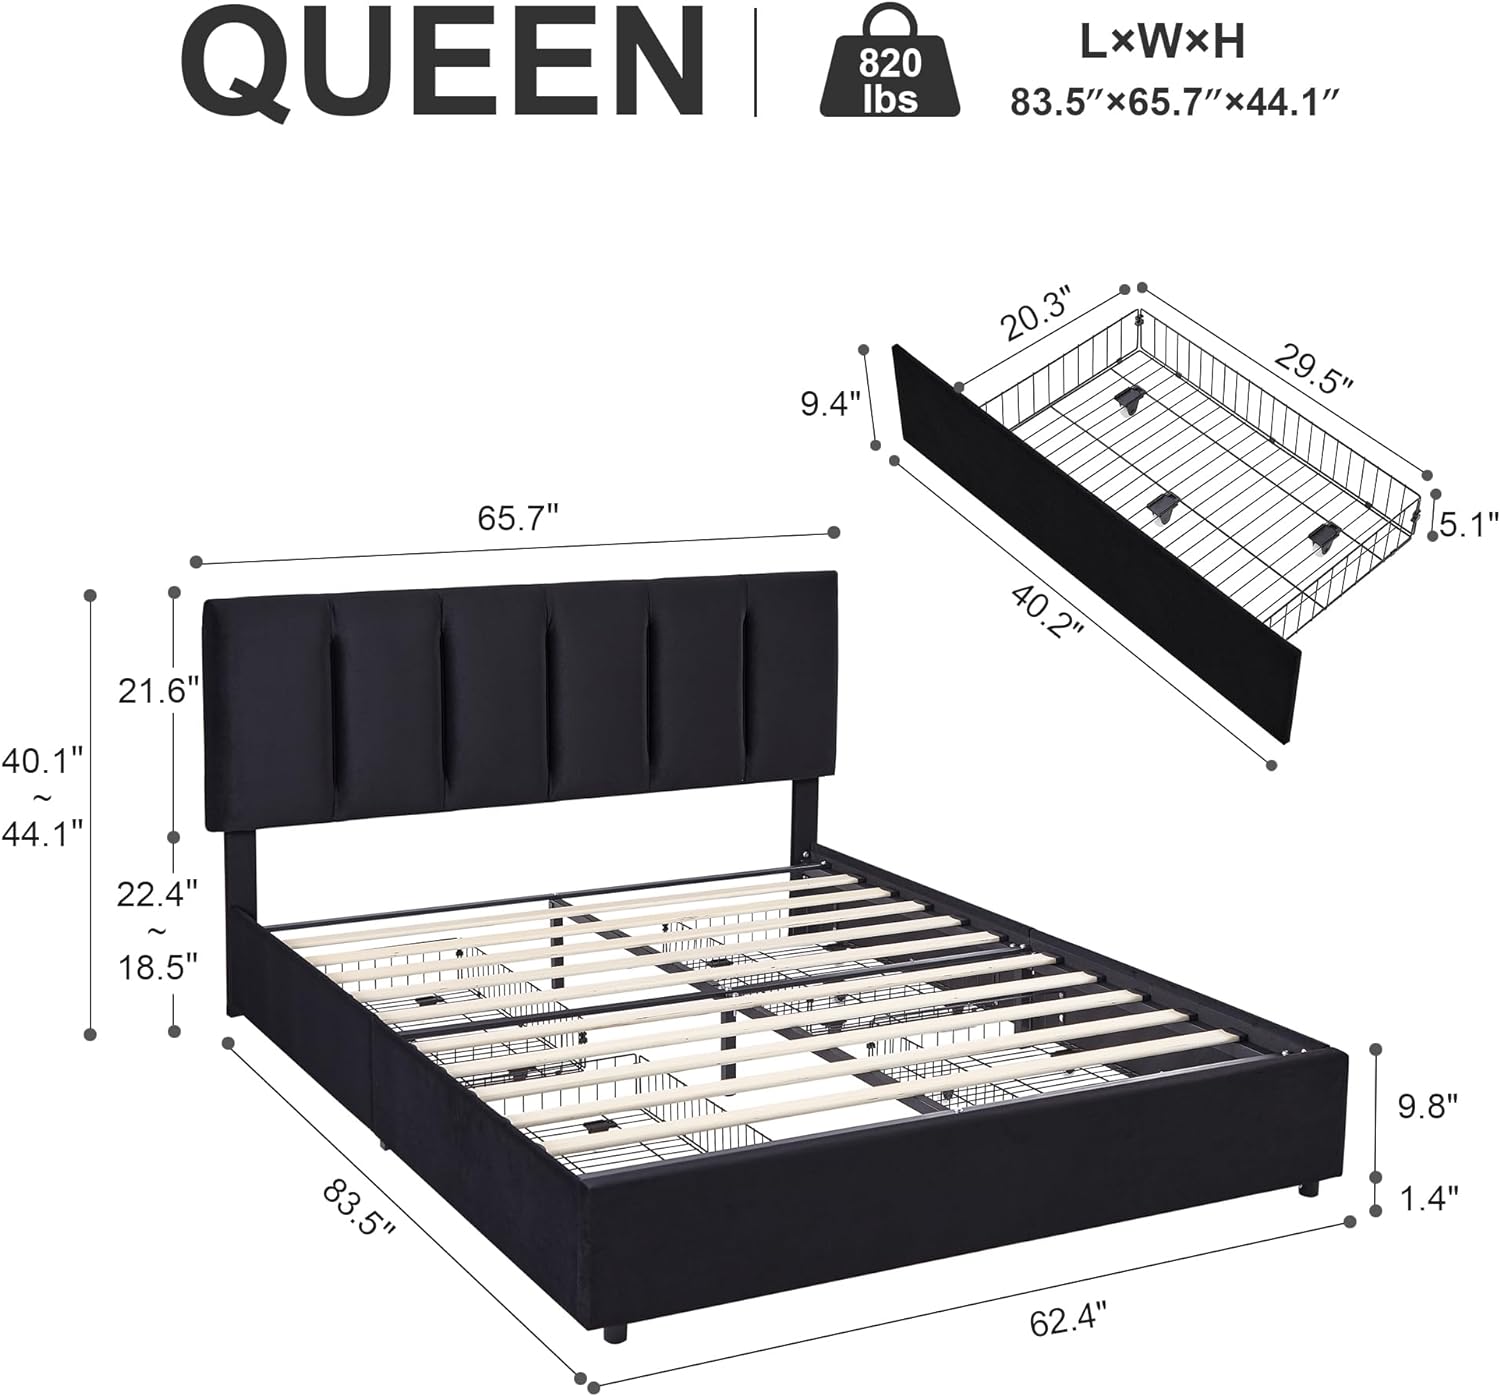 VECELO Upholstered Bed Frame with 4 Storage Drawers and Adjustable Velvet Headboard